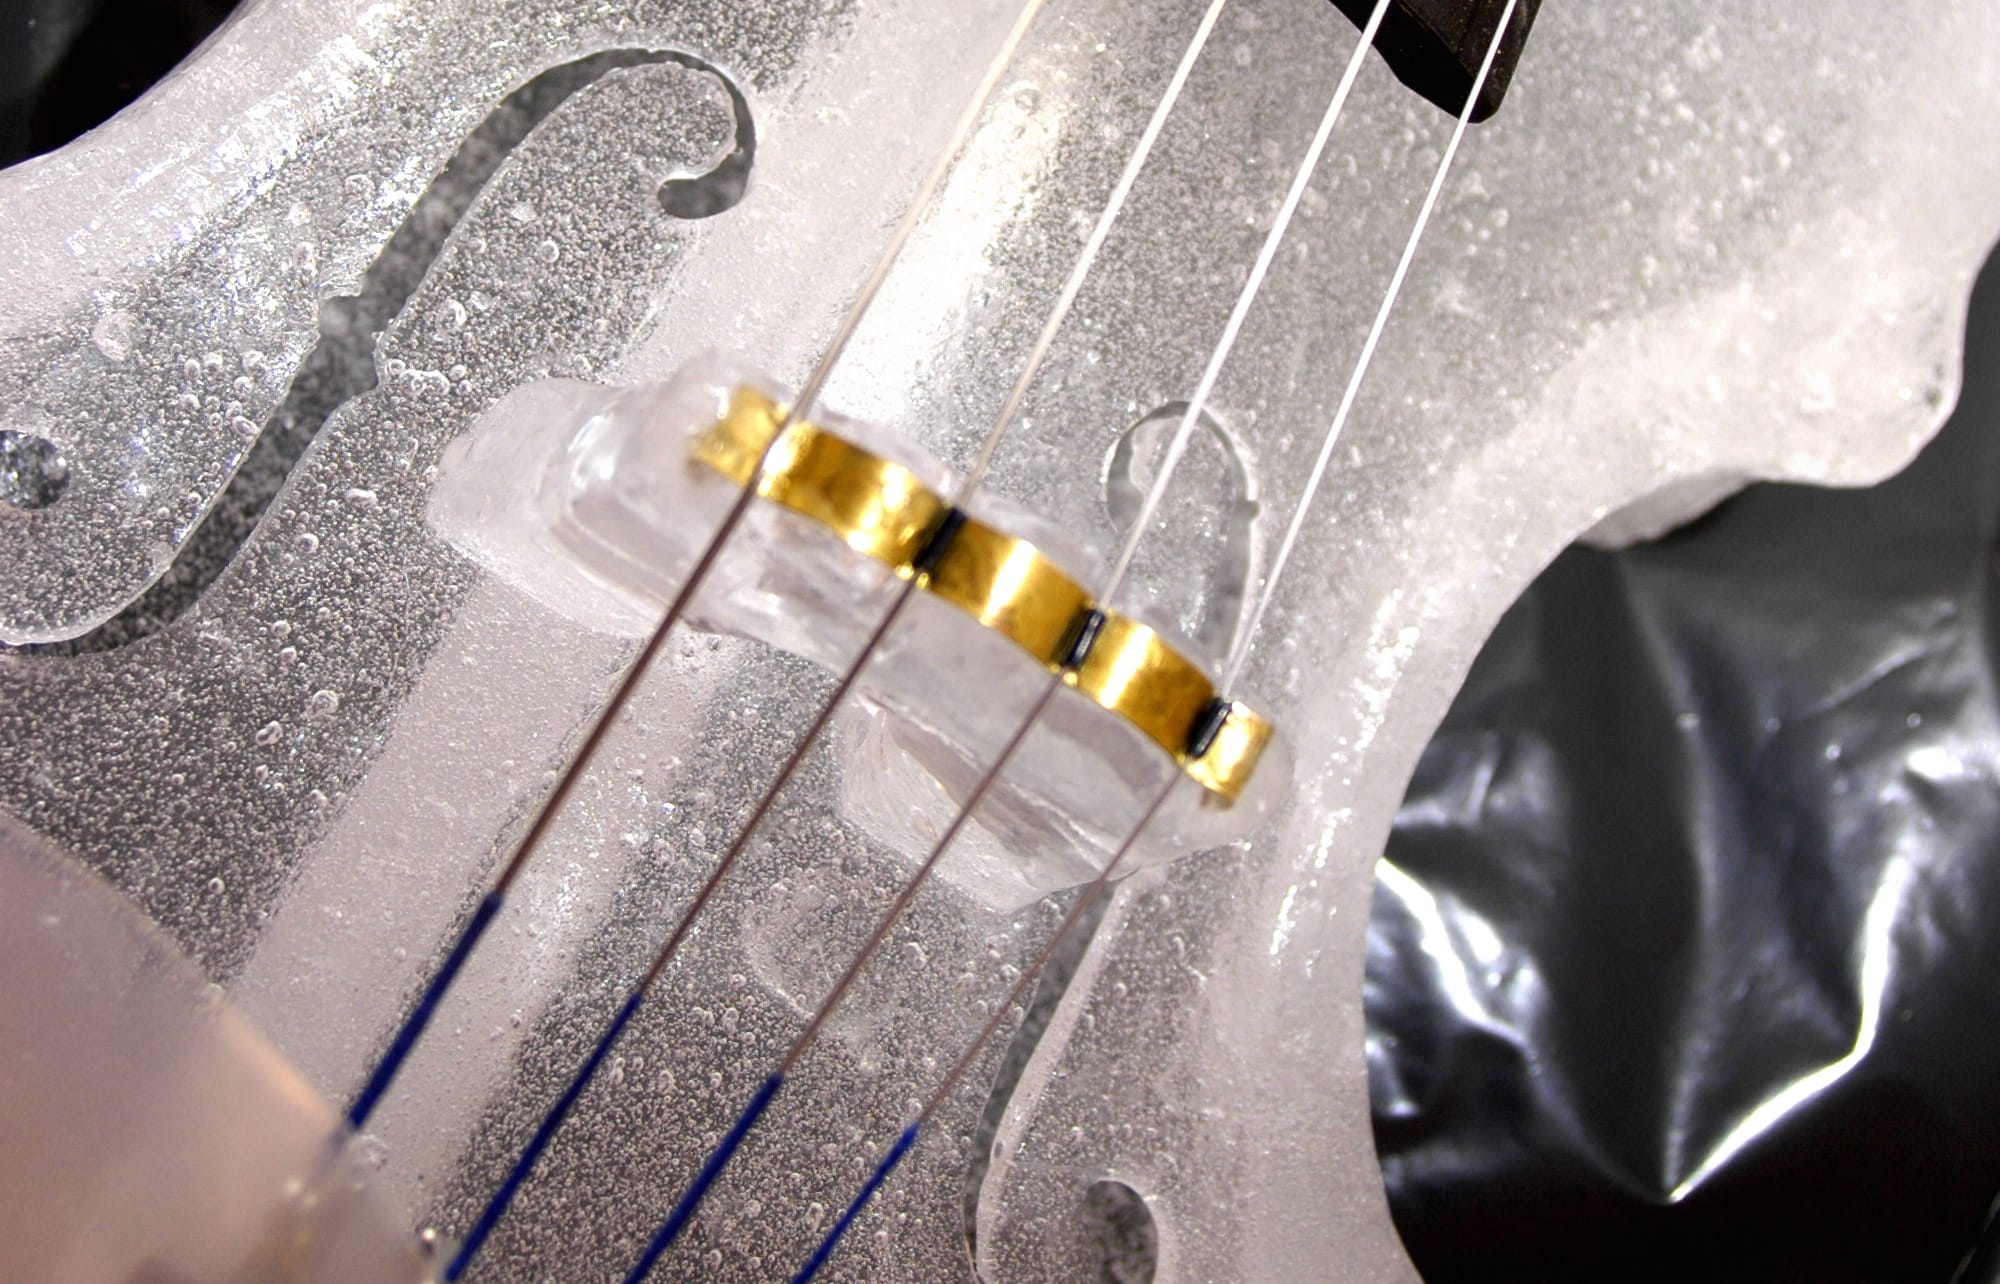 An ice violin by Tim Linhart